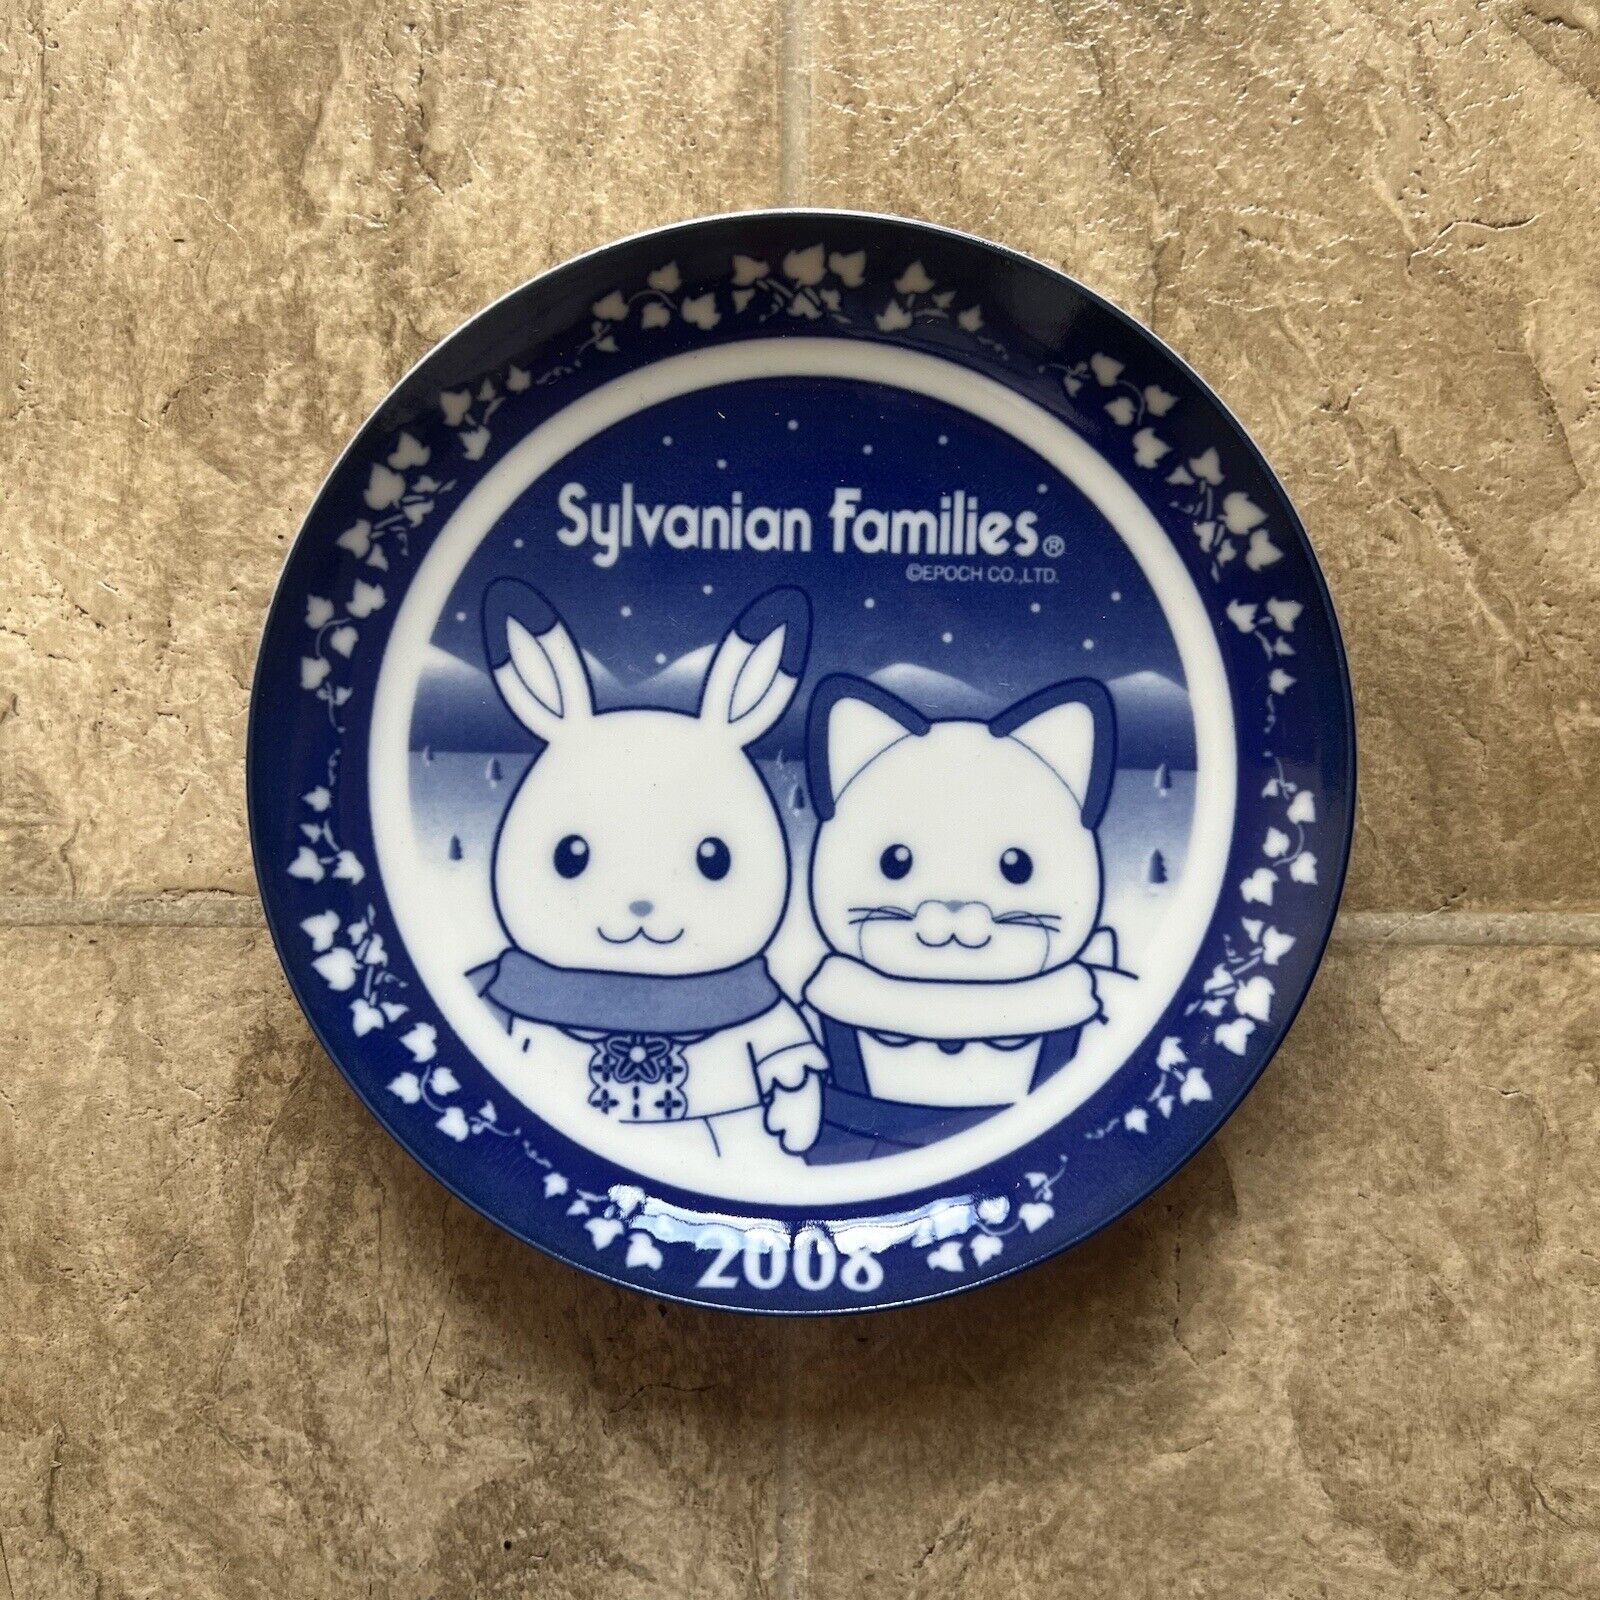 Sylvanian Families Calico Critters Rare 2008 Blue White Ceramic Dish Plate